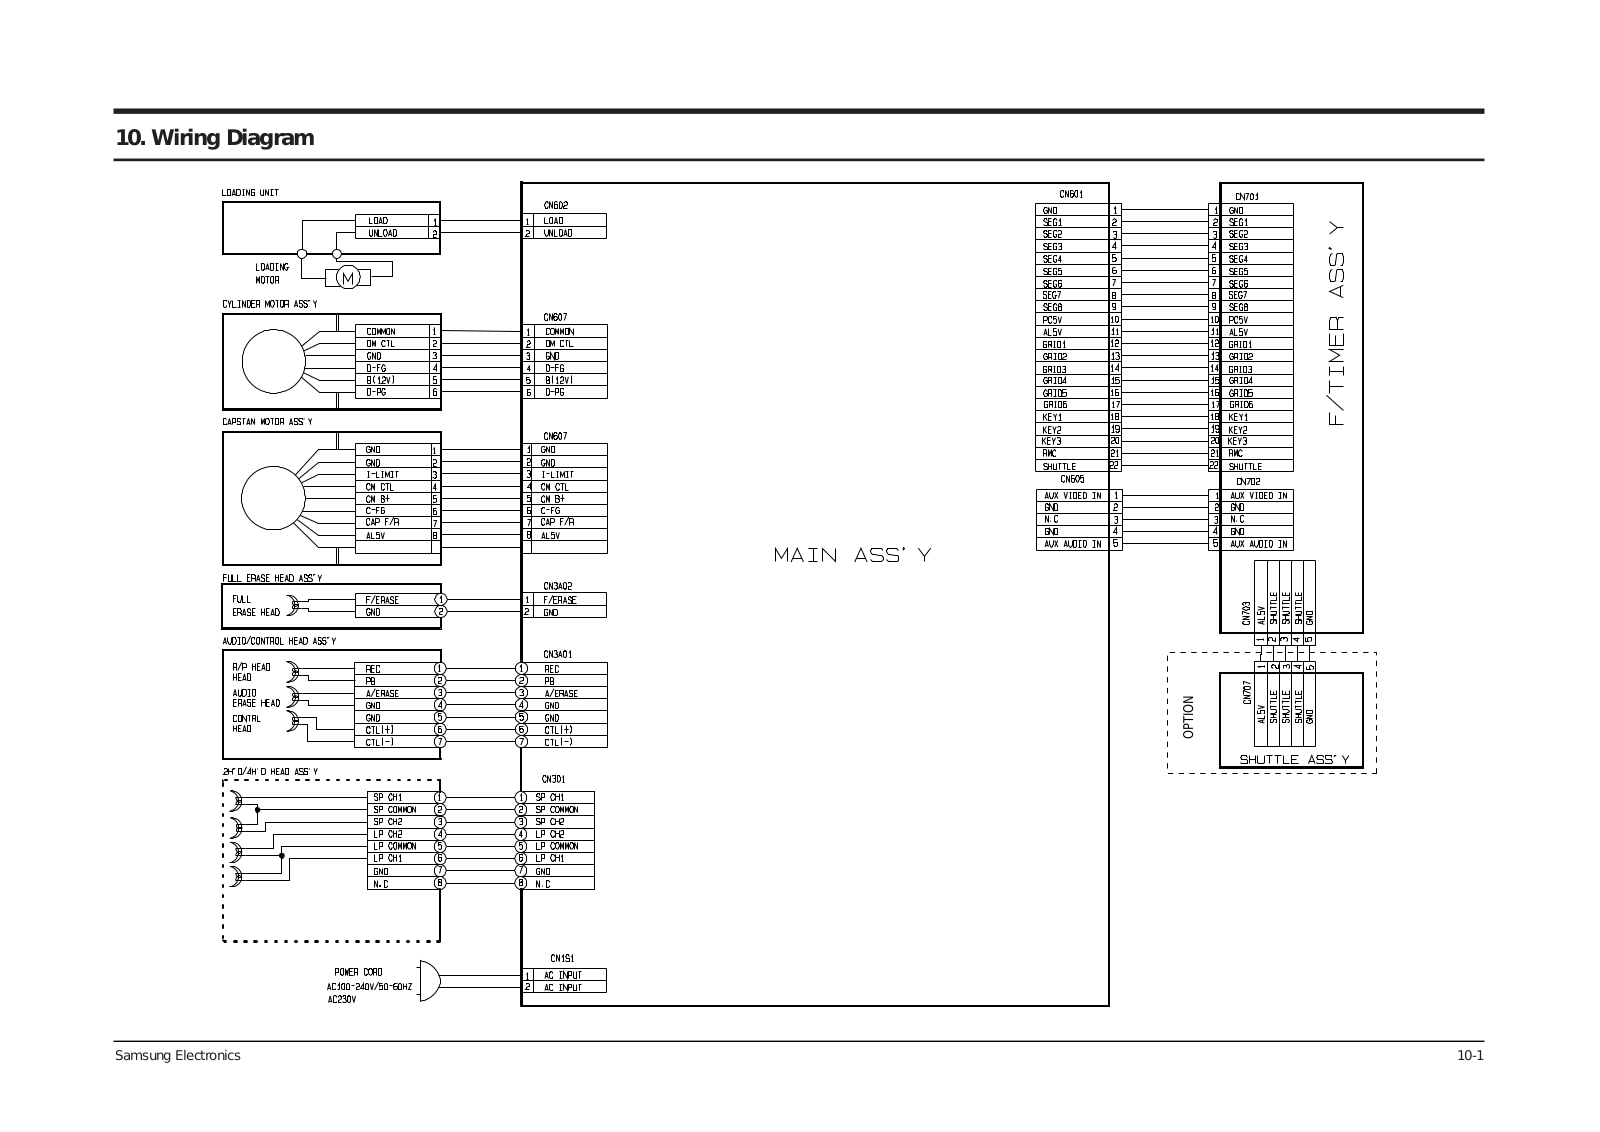 Samsung SVR-410, SVR-415, SVR-215, SVR-210, SV-B80G-CIS Wiring Diagram